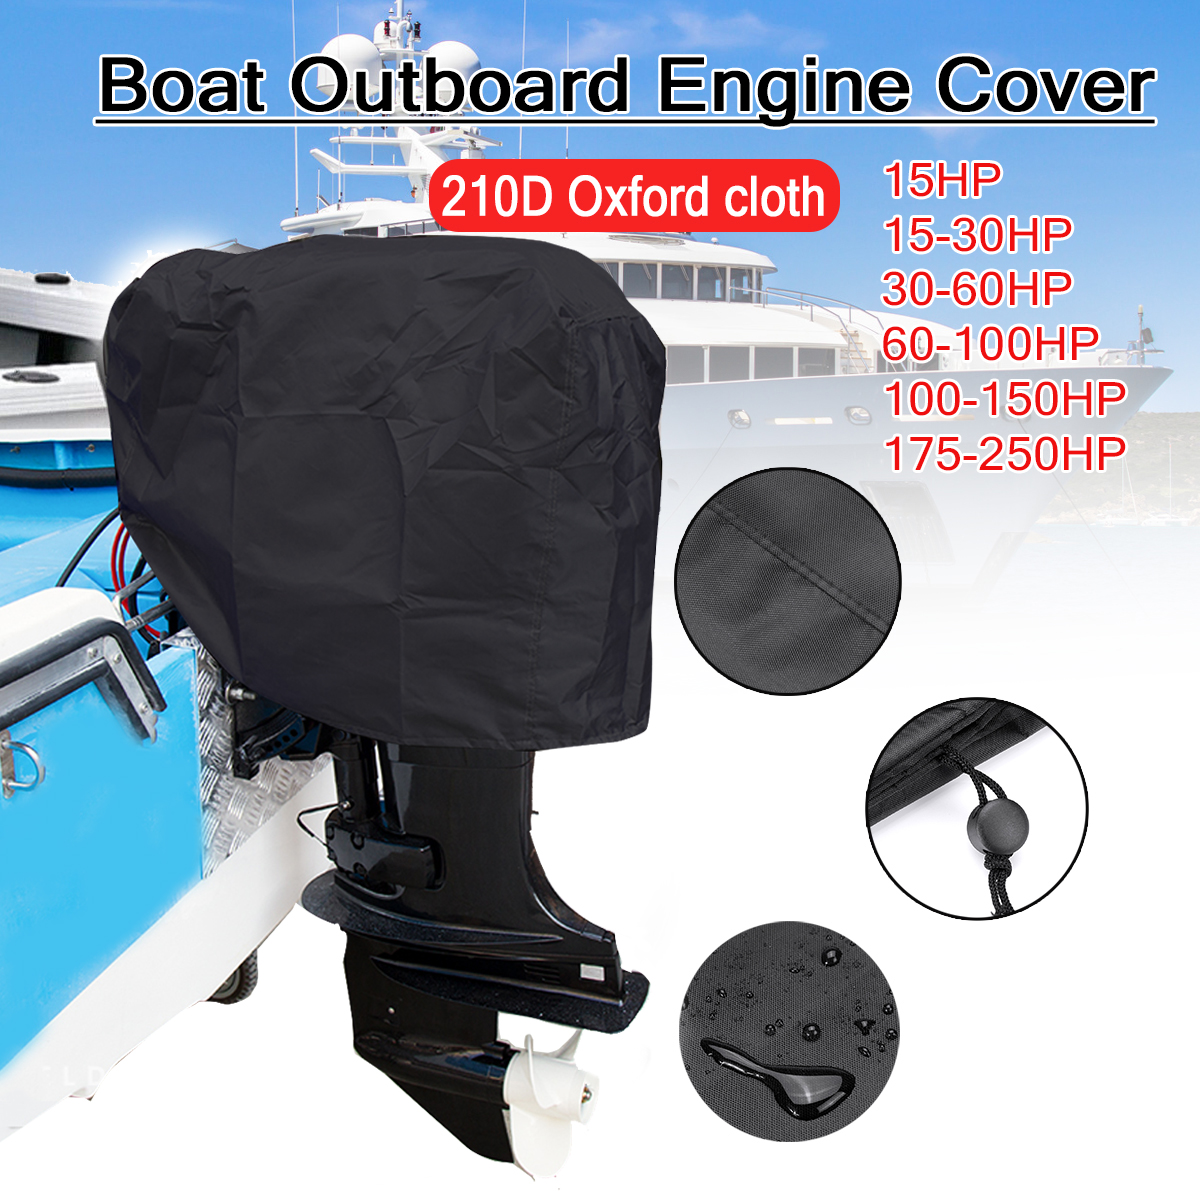 210D Oxford Boat Full Outboard Motor Engine Cover 15HP/15-30HP/30-60HP/60-100HP/100-150HP/175-250HP Waterproof Black